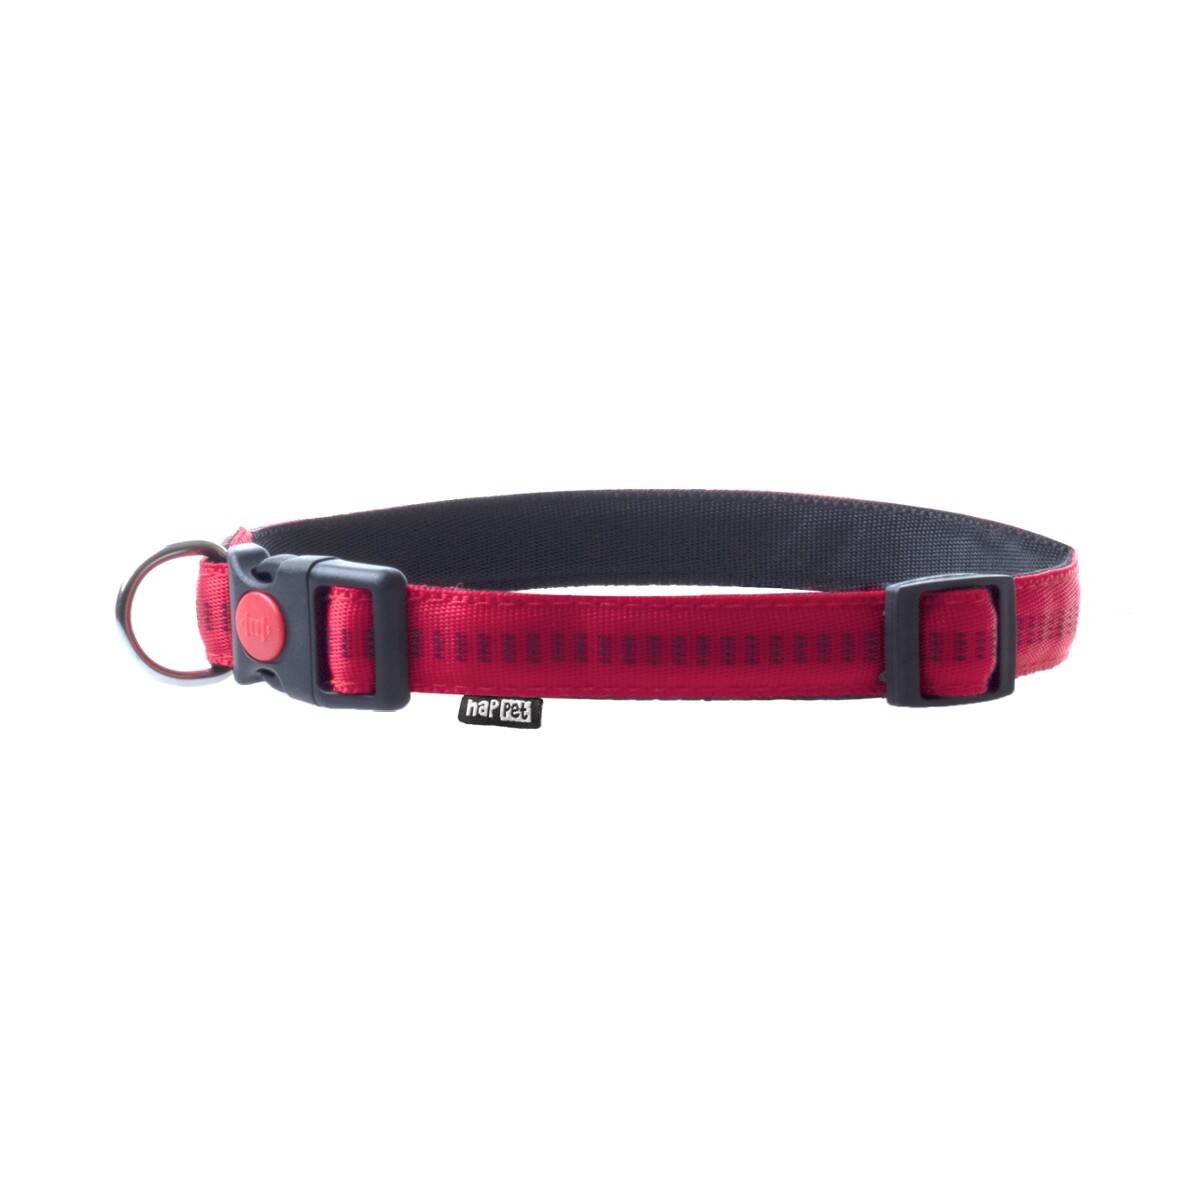 Collar XL / Soft Style / Red - Happet JC24